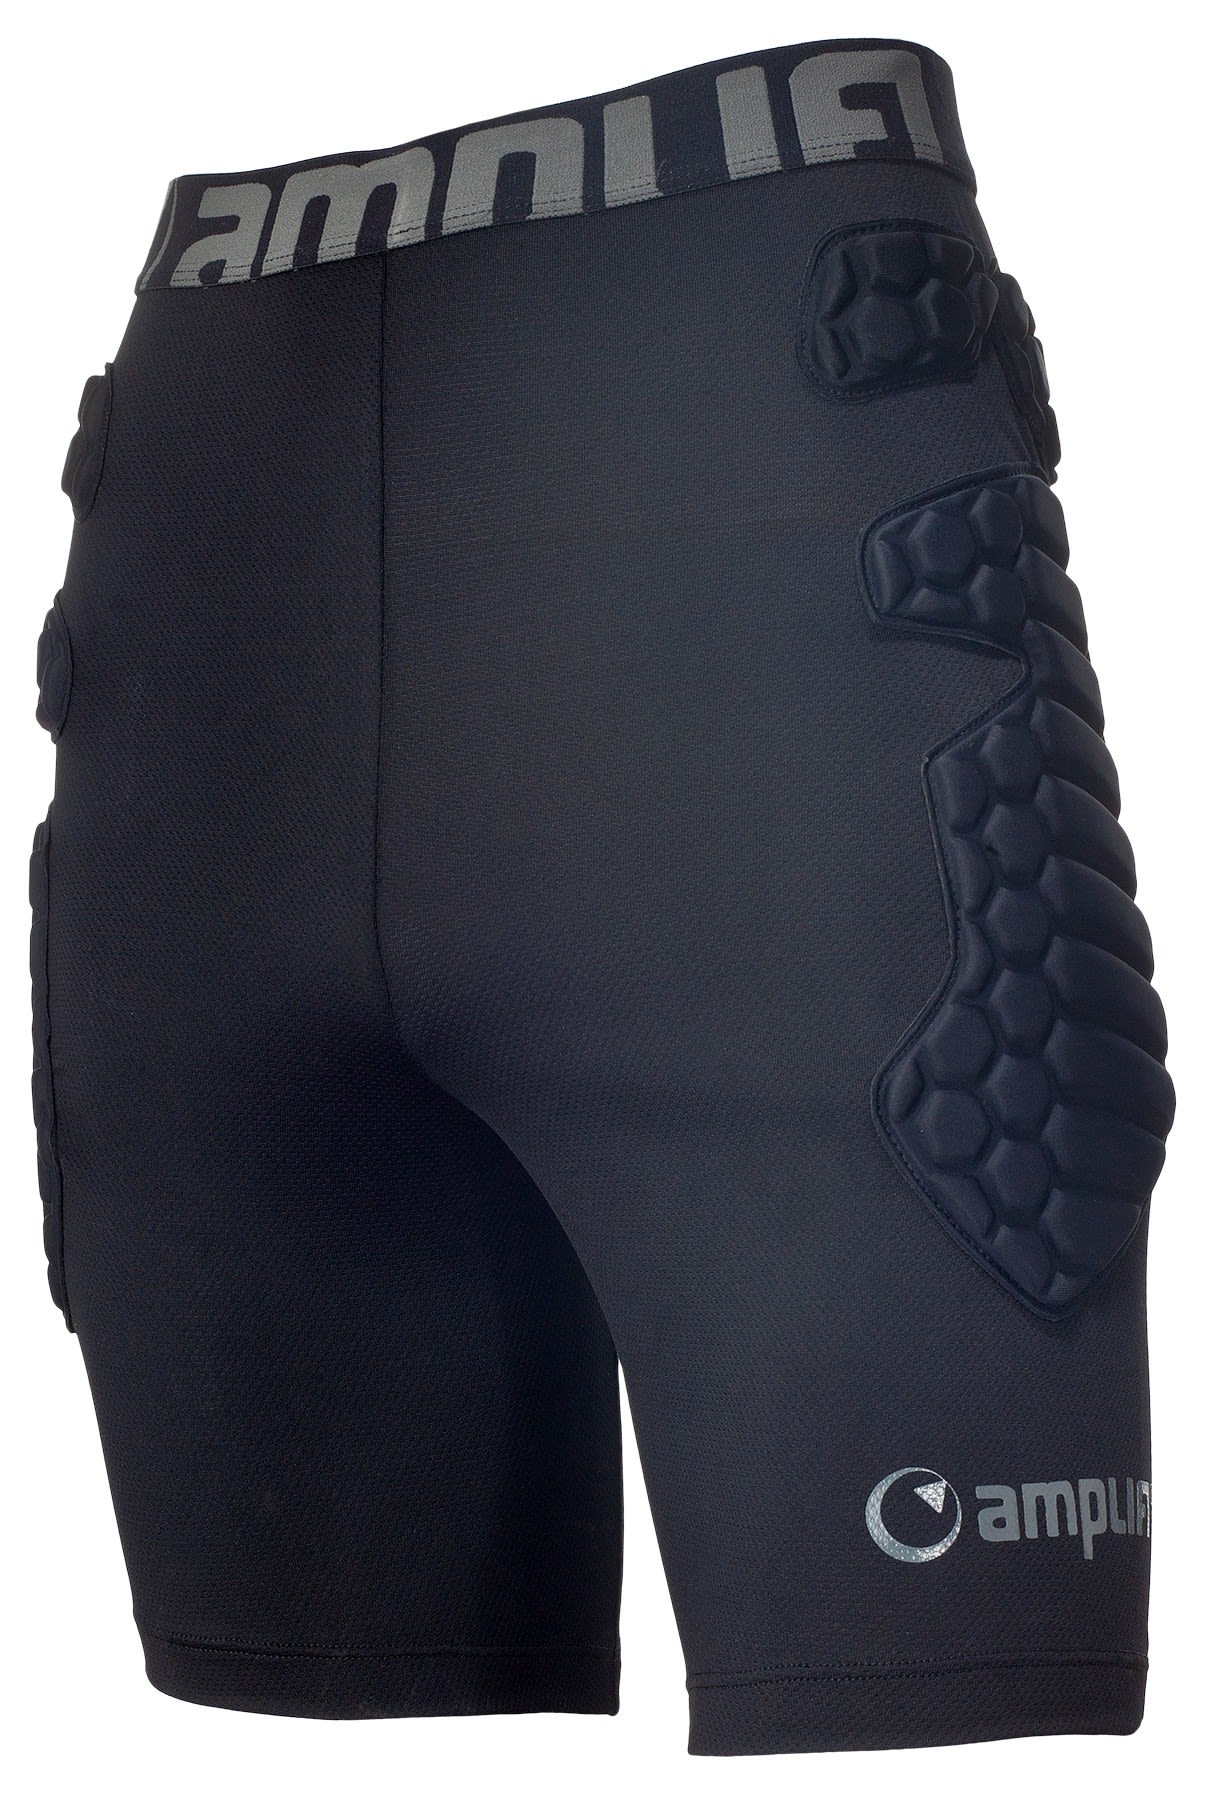 Amplifi Salvo Pants Schwarz- Protektorenhosen- Grsse XXS - Farbe Black